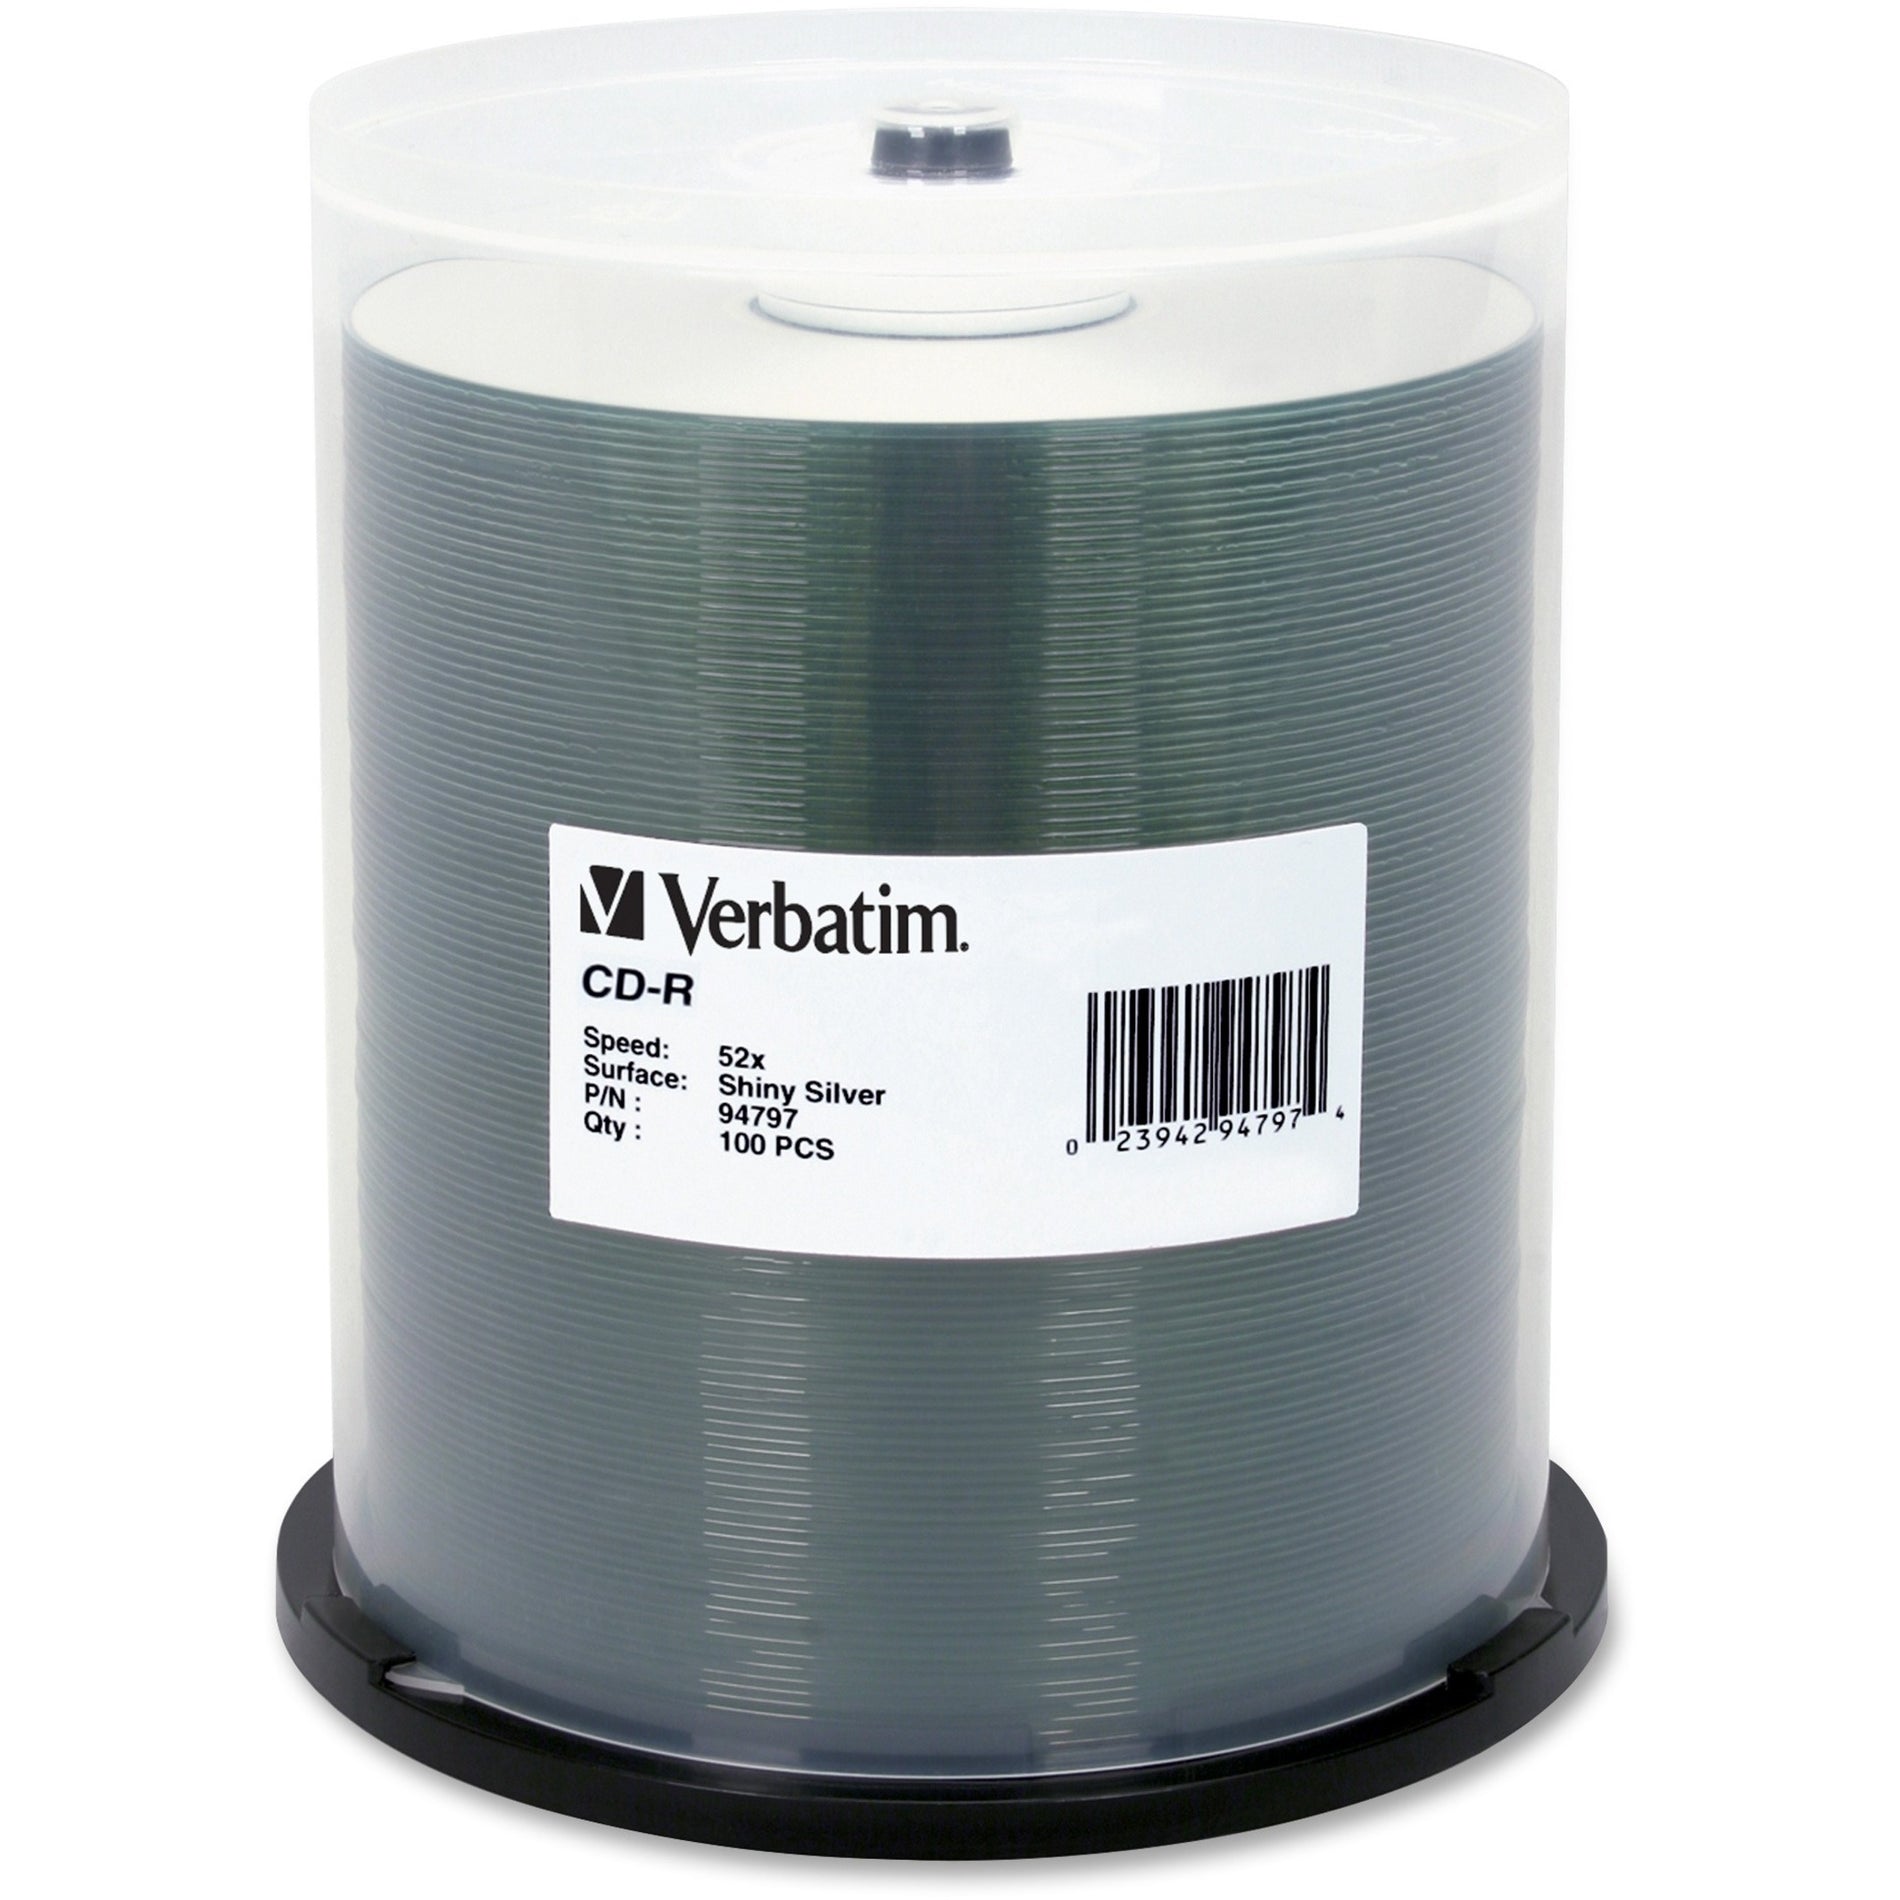 Verbatim 94797 CD-R 700MB 52X DataLifePlus Shiny Silver Silk Screen Printable - 100pk Spindle